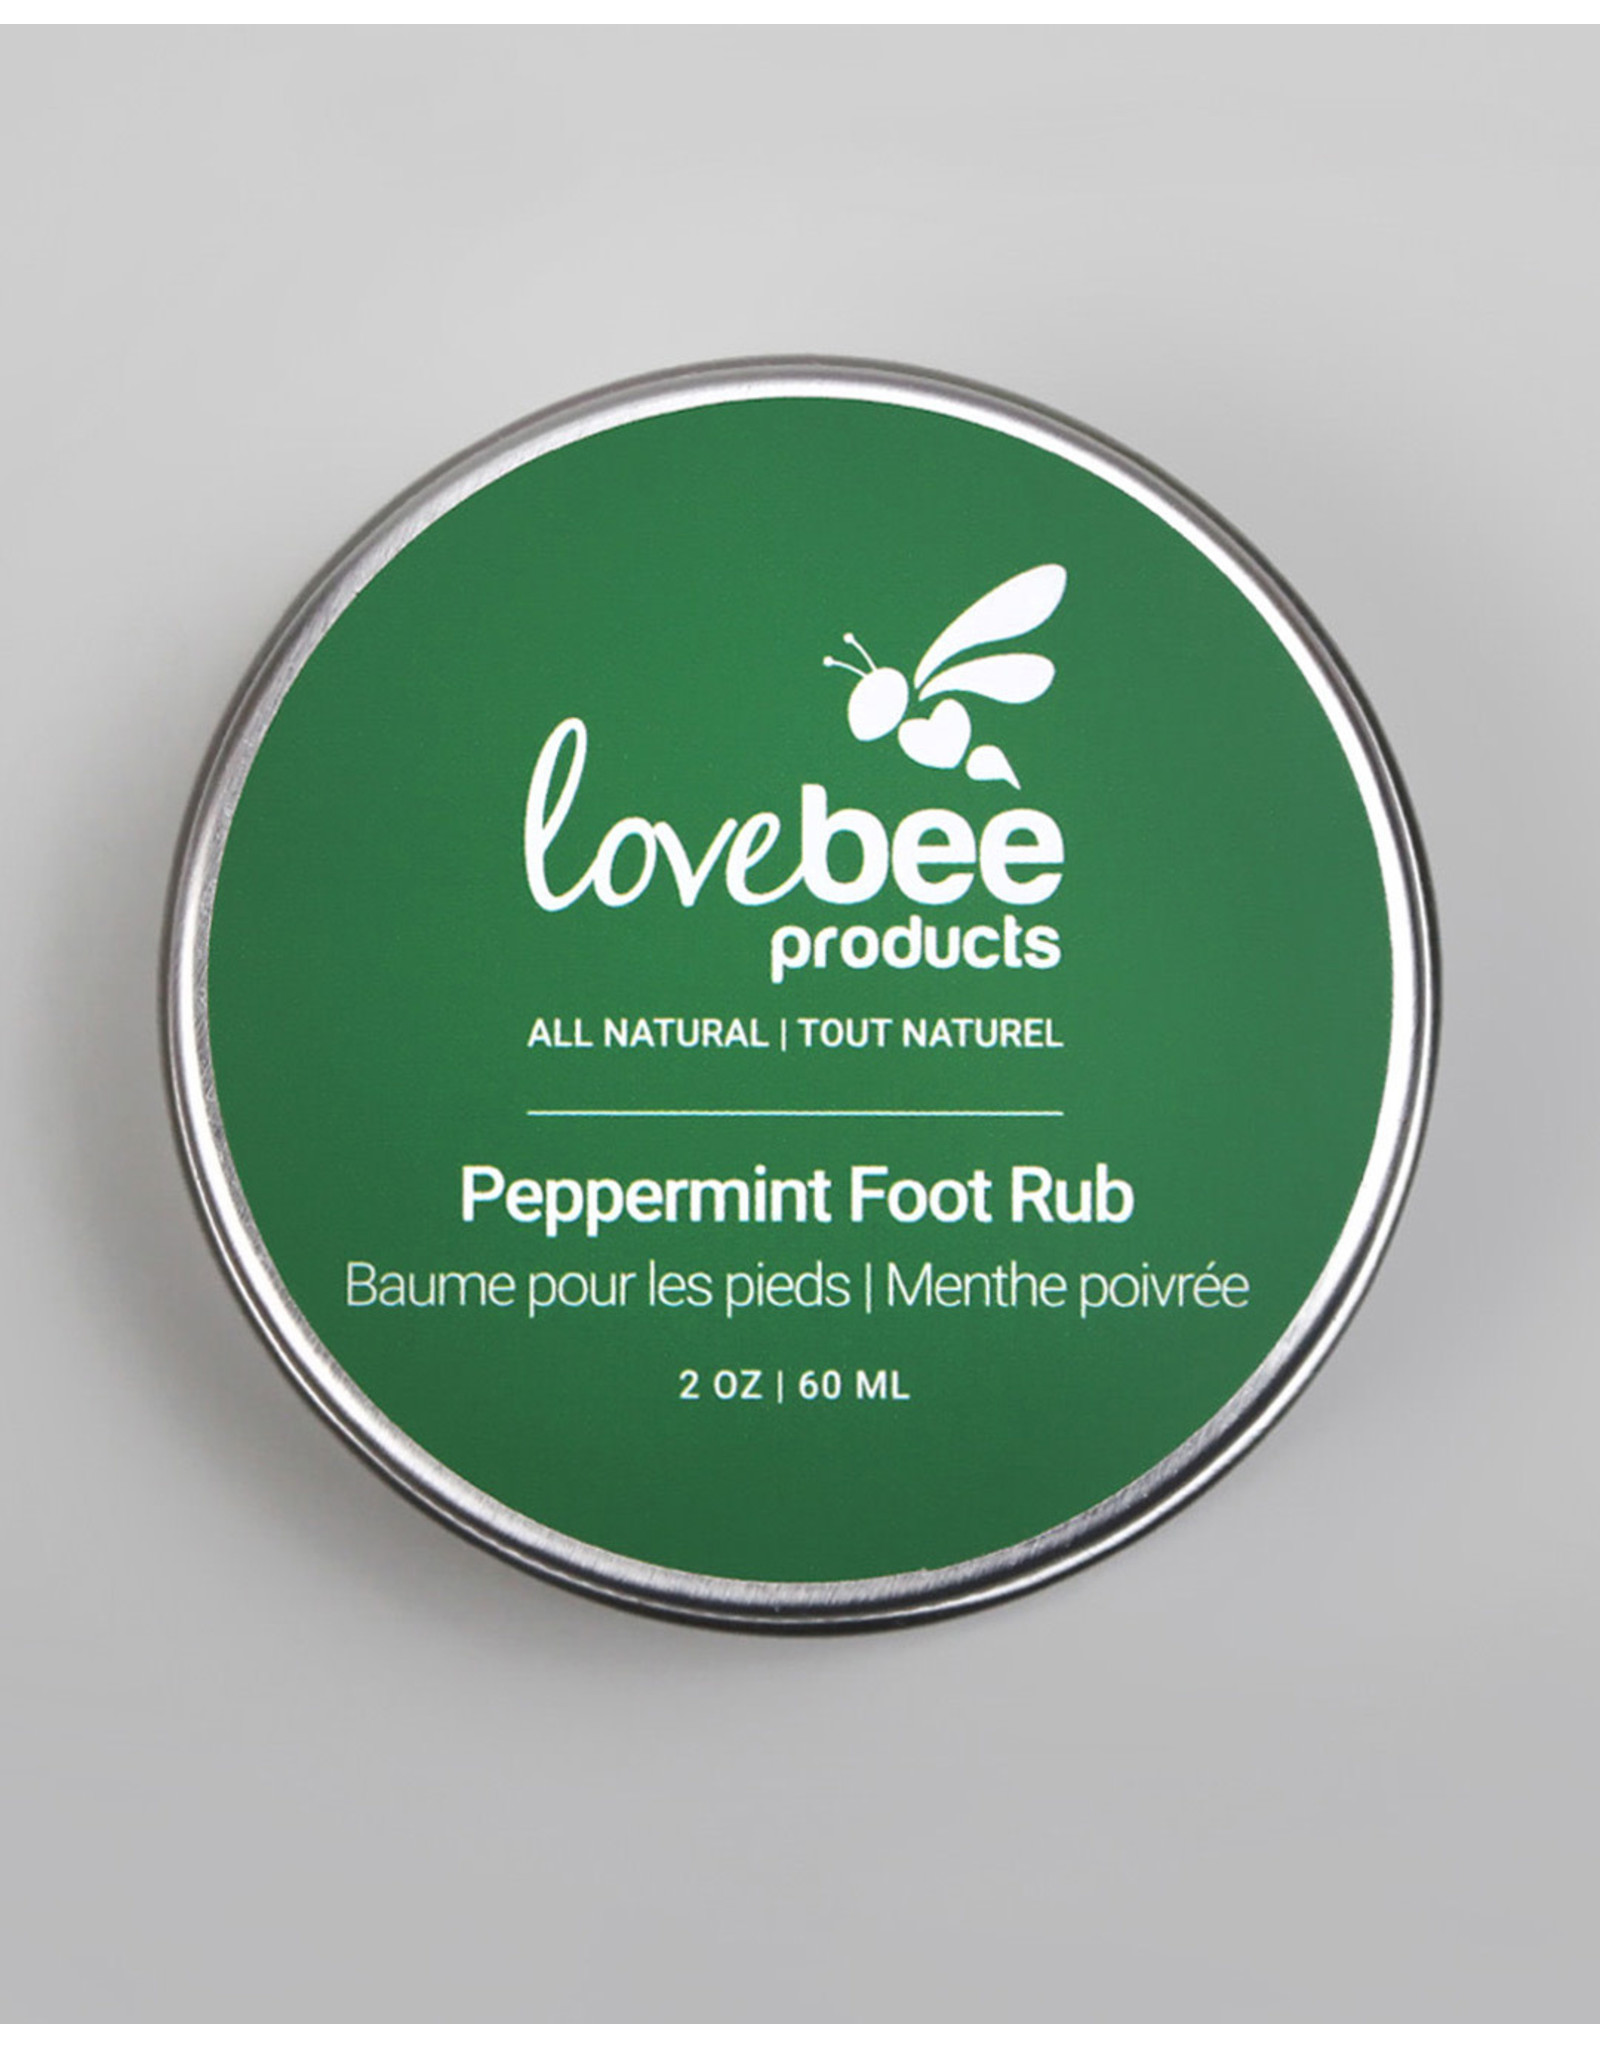 Lovebee Foot Rub Peppermint by Lovebee Products